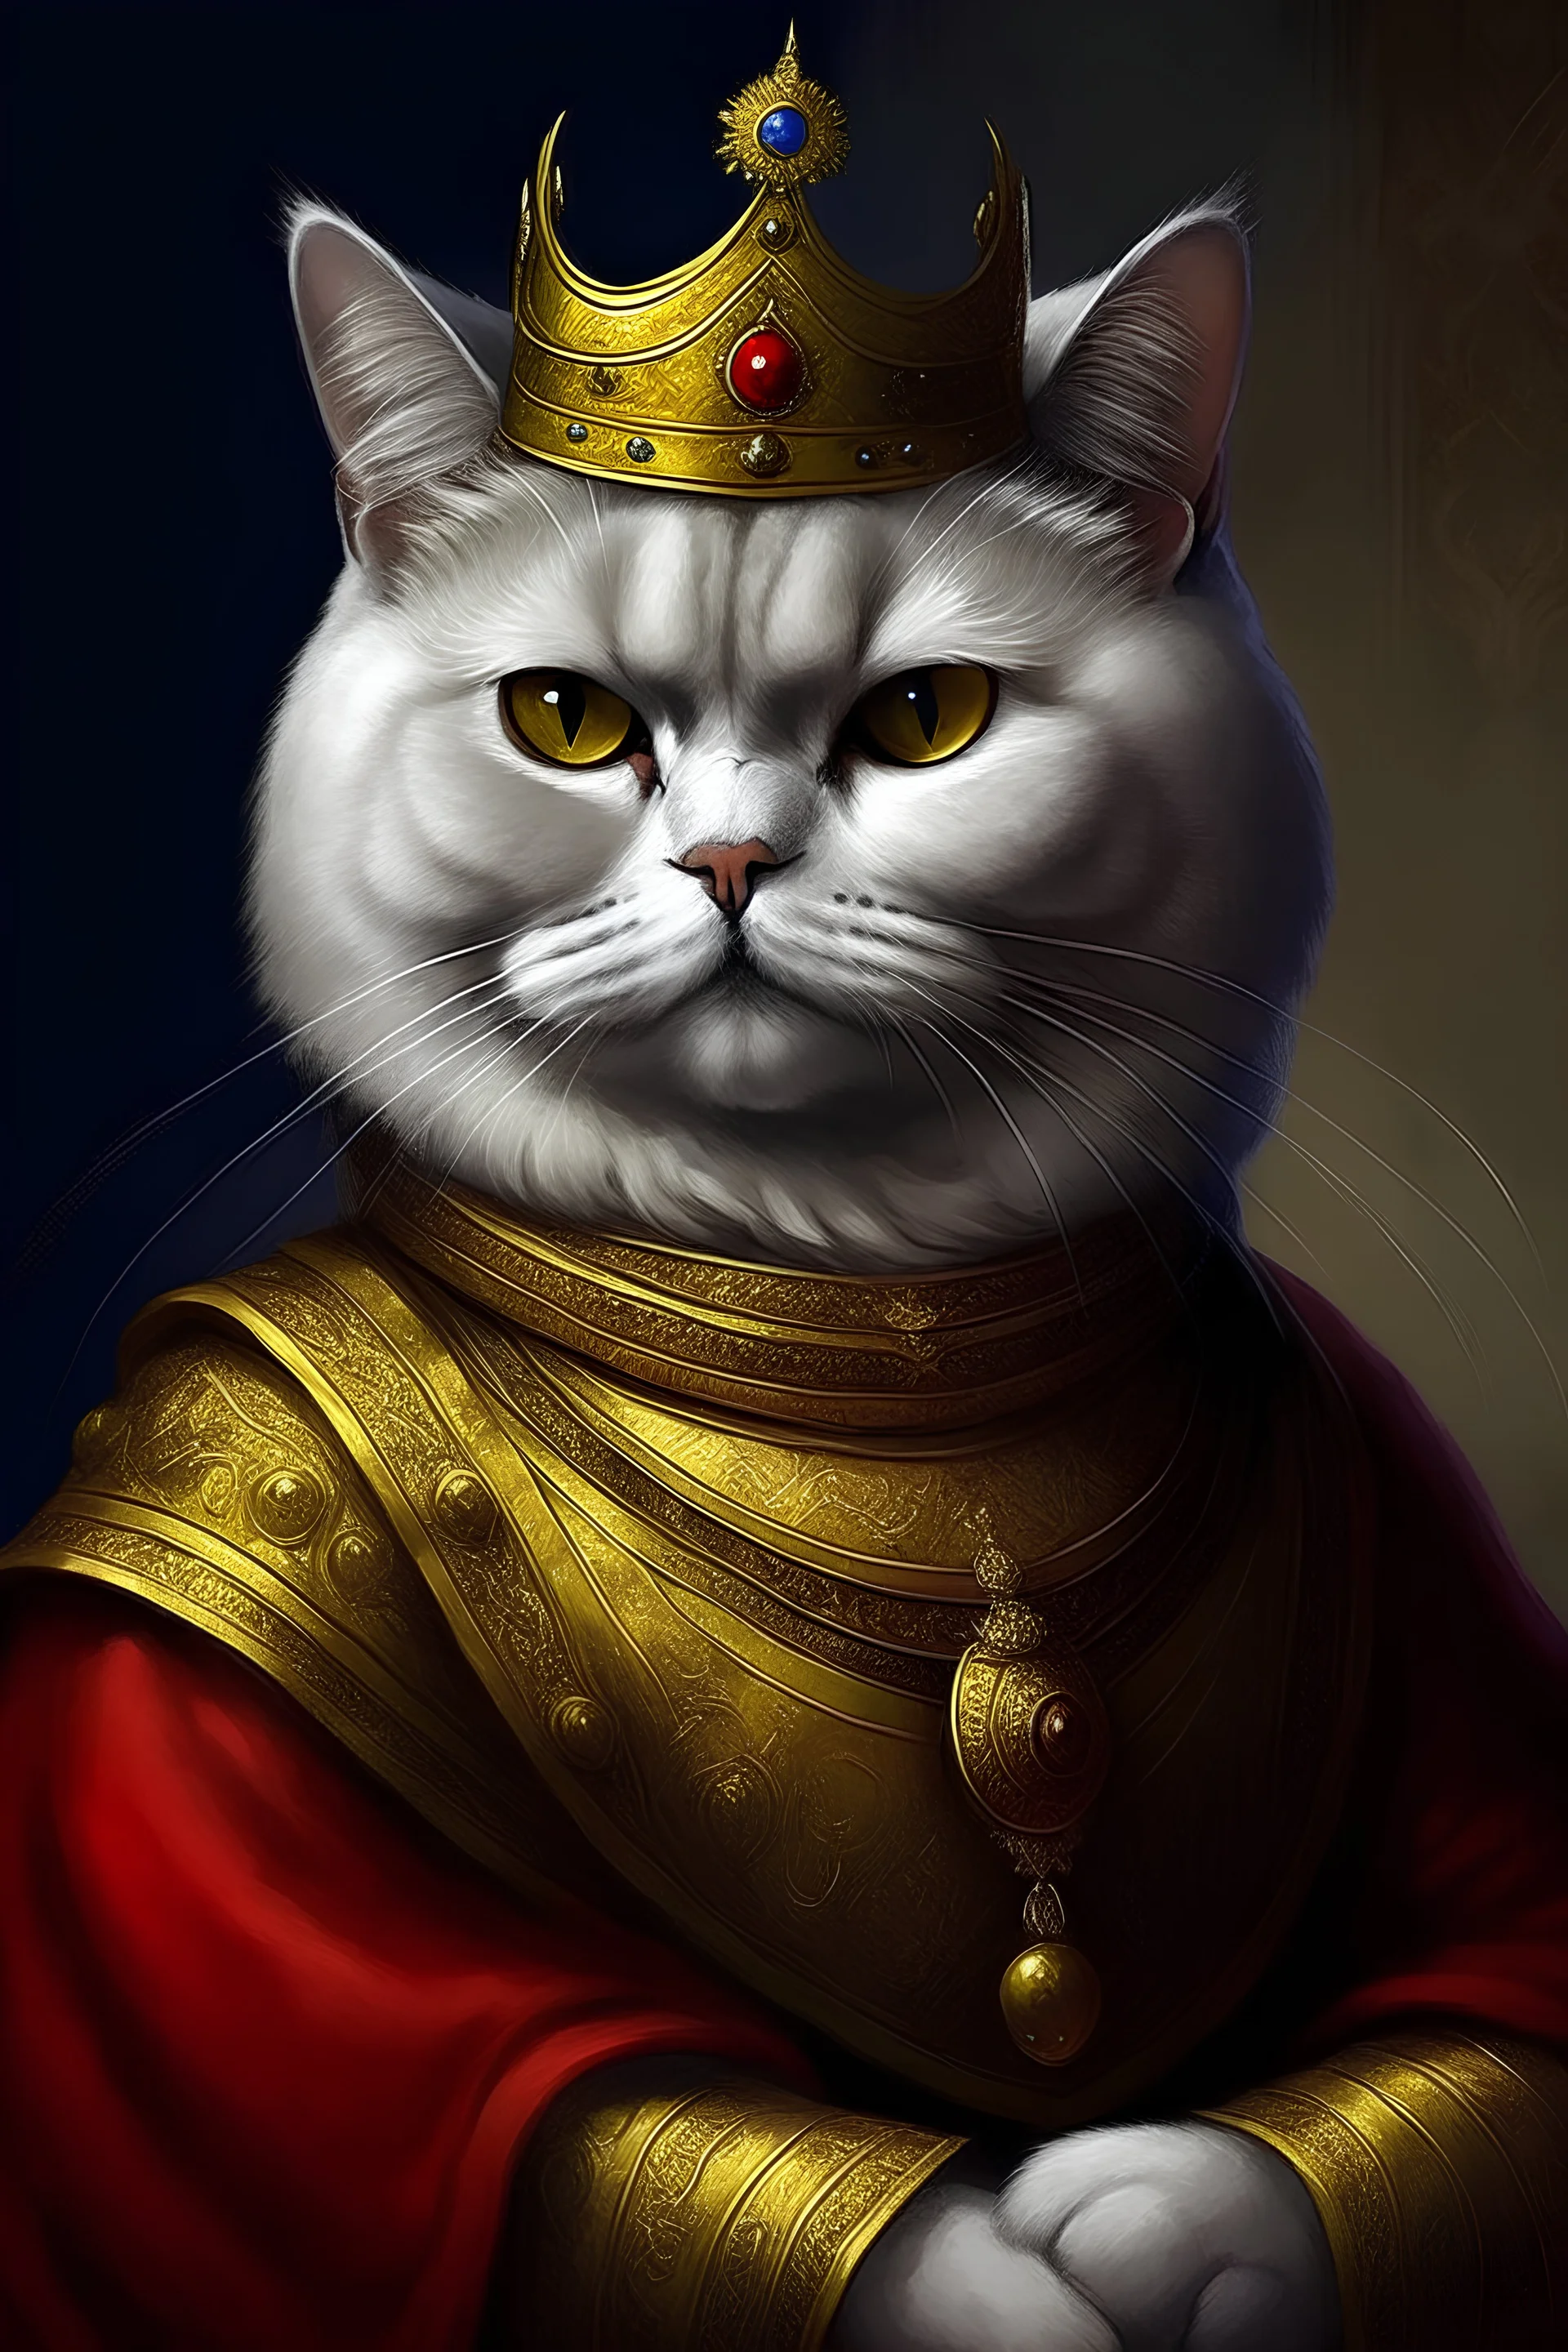 persan cat looking like an emperor